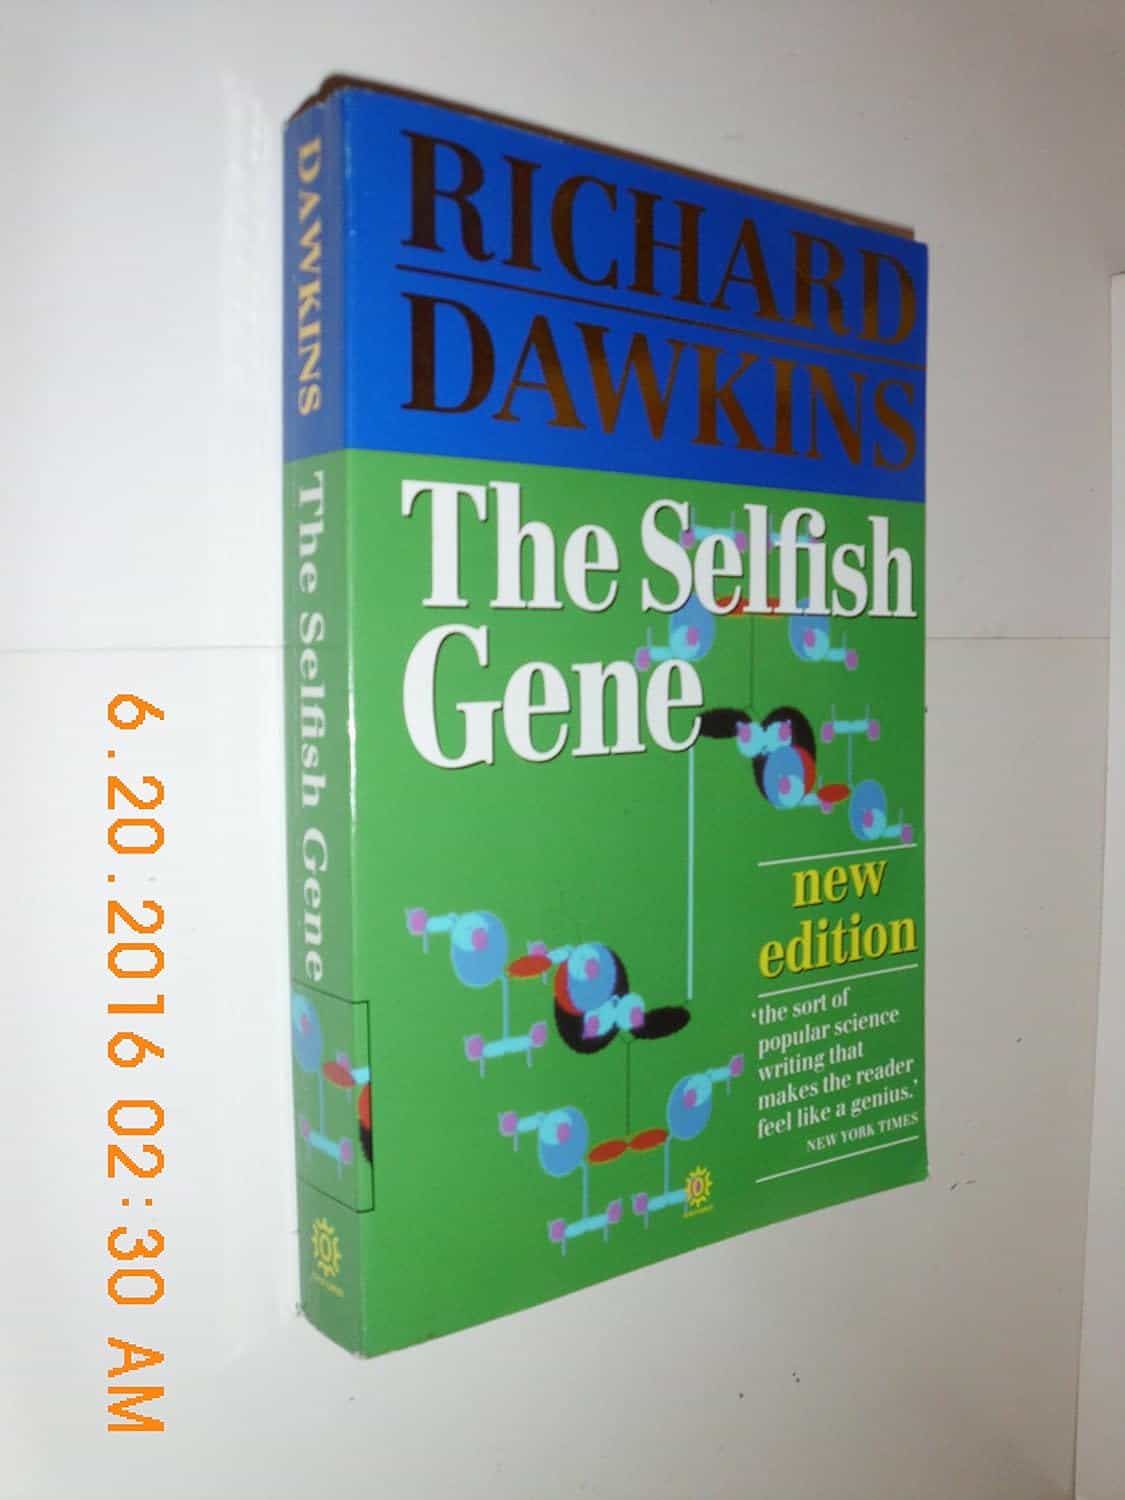 The Selfish Gene by Richard Dawkins (1976)